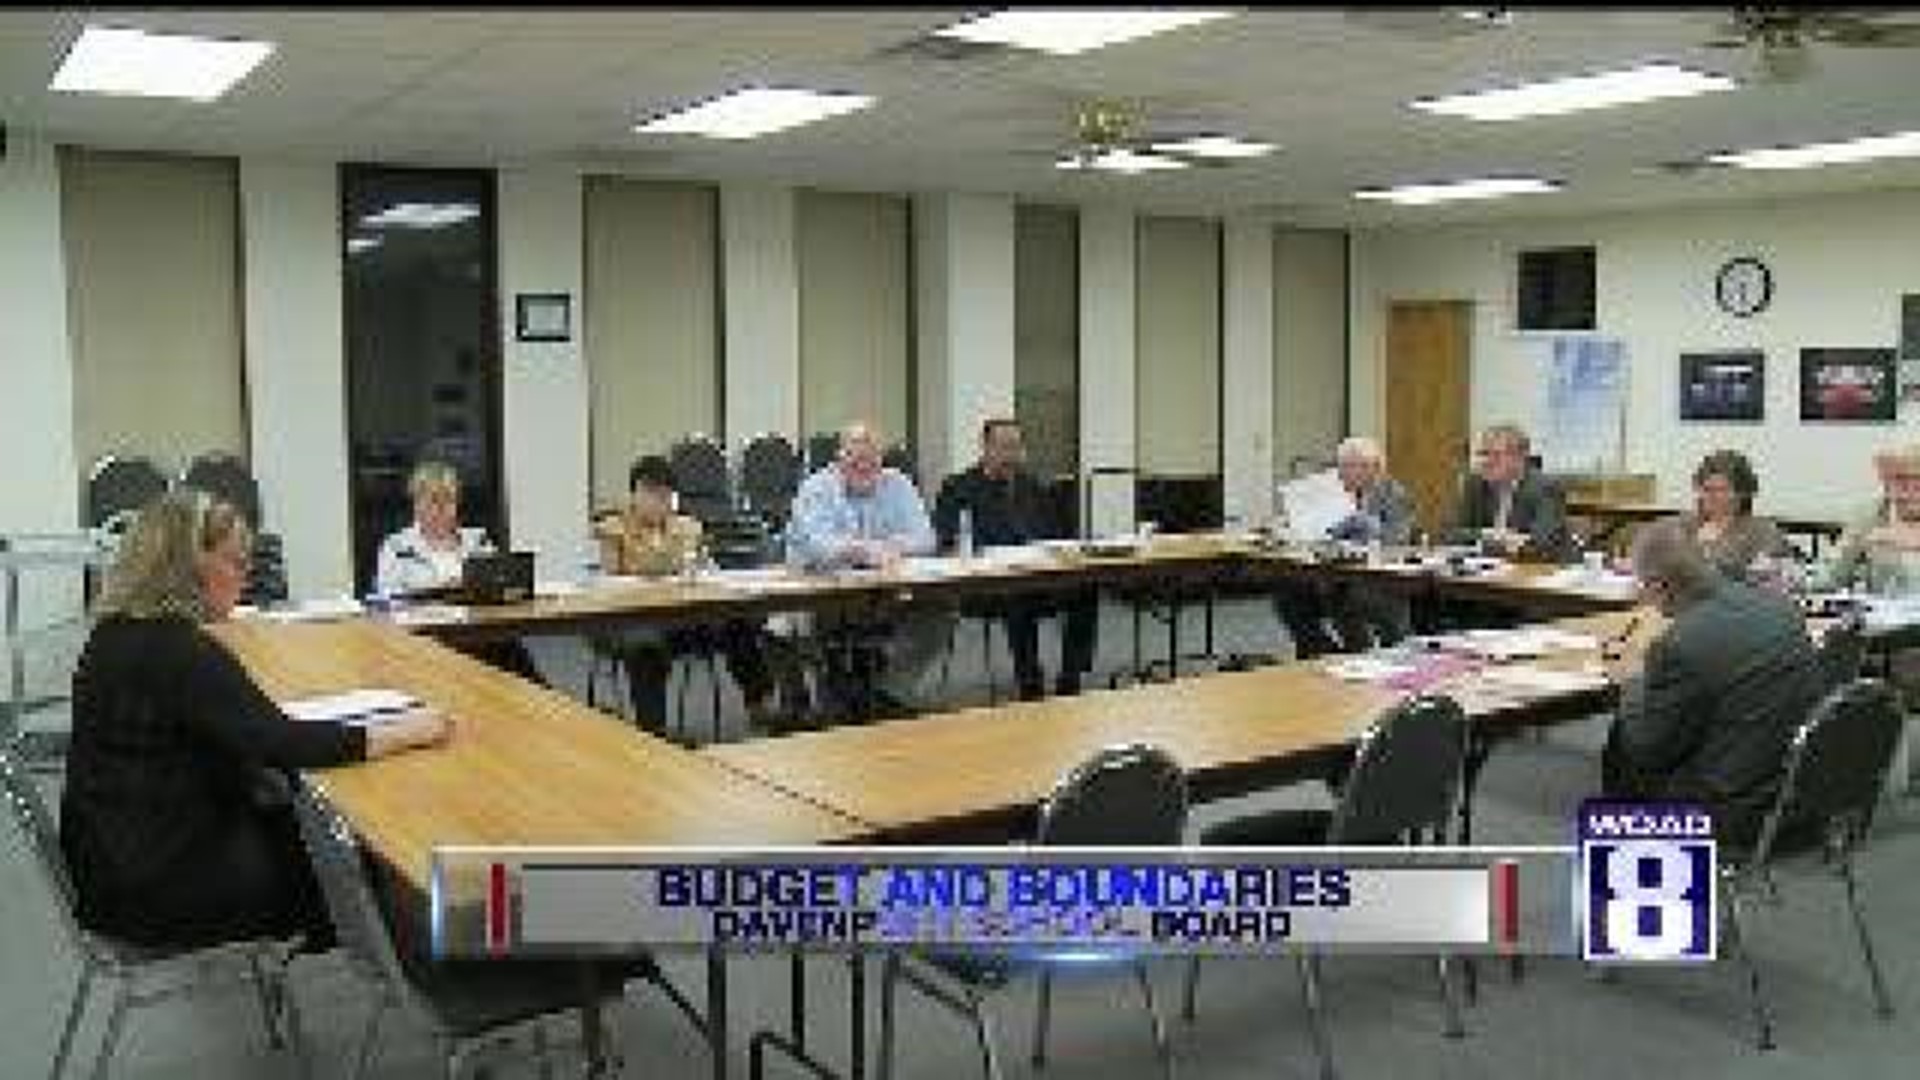 Davenport School Board Talks Budget and Boundaries